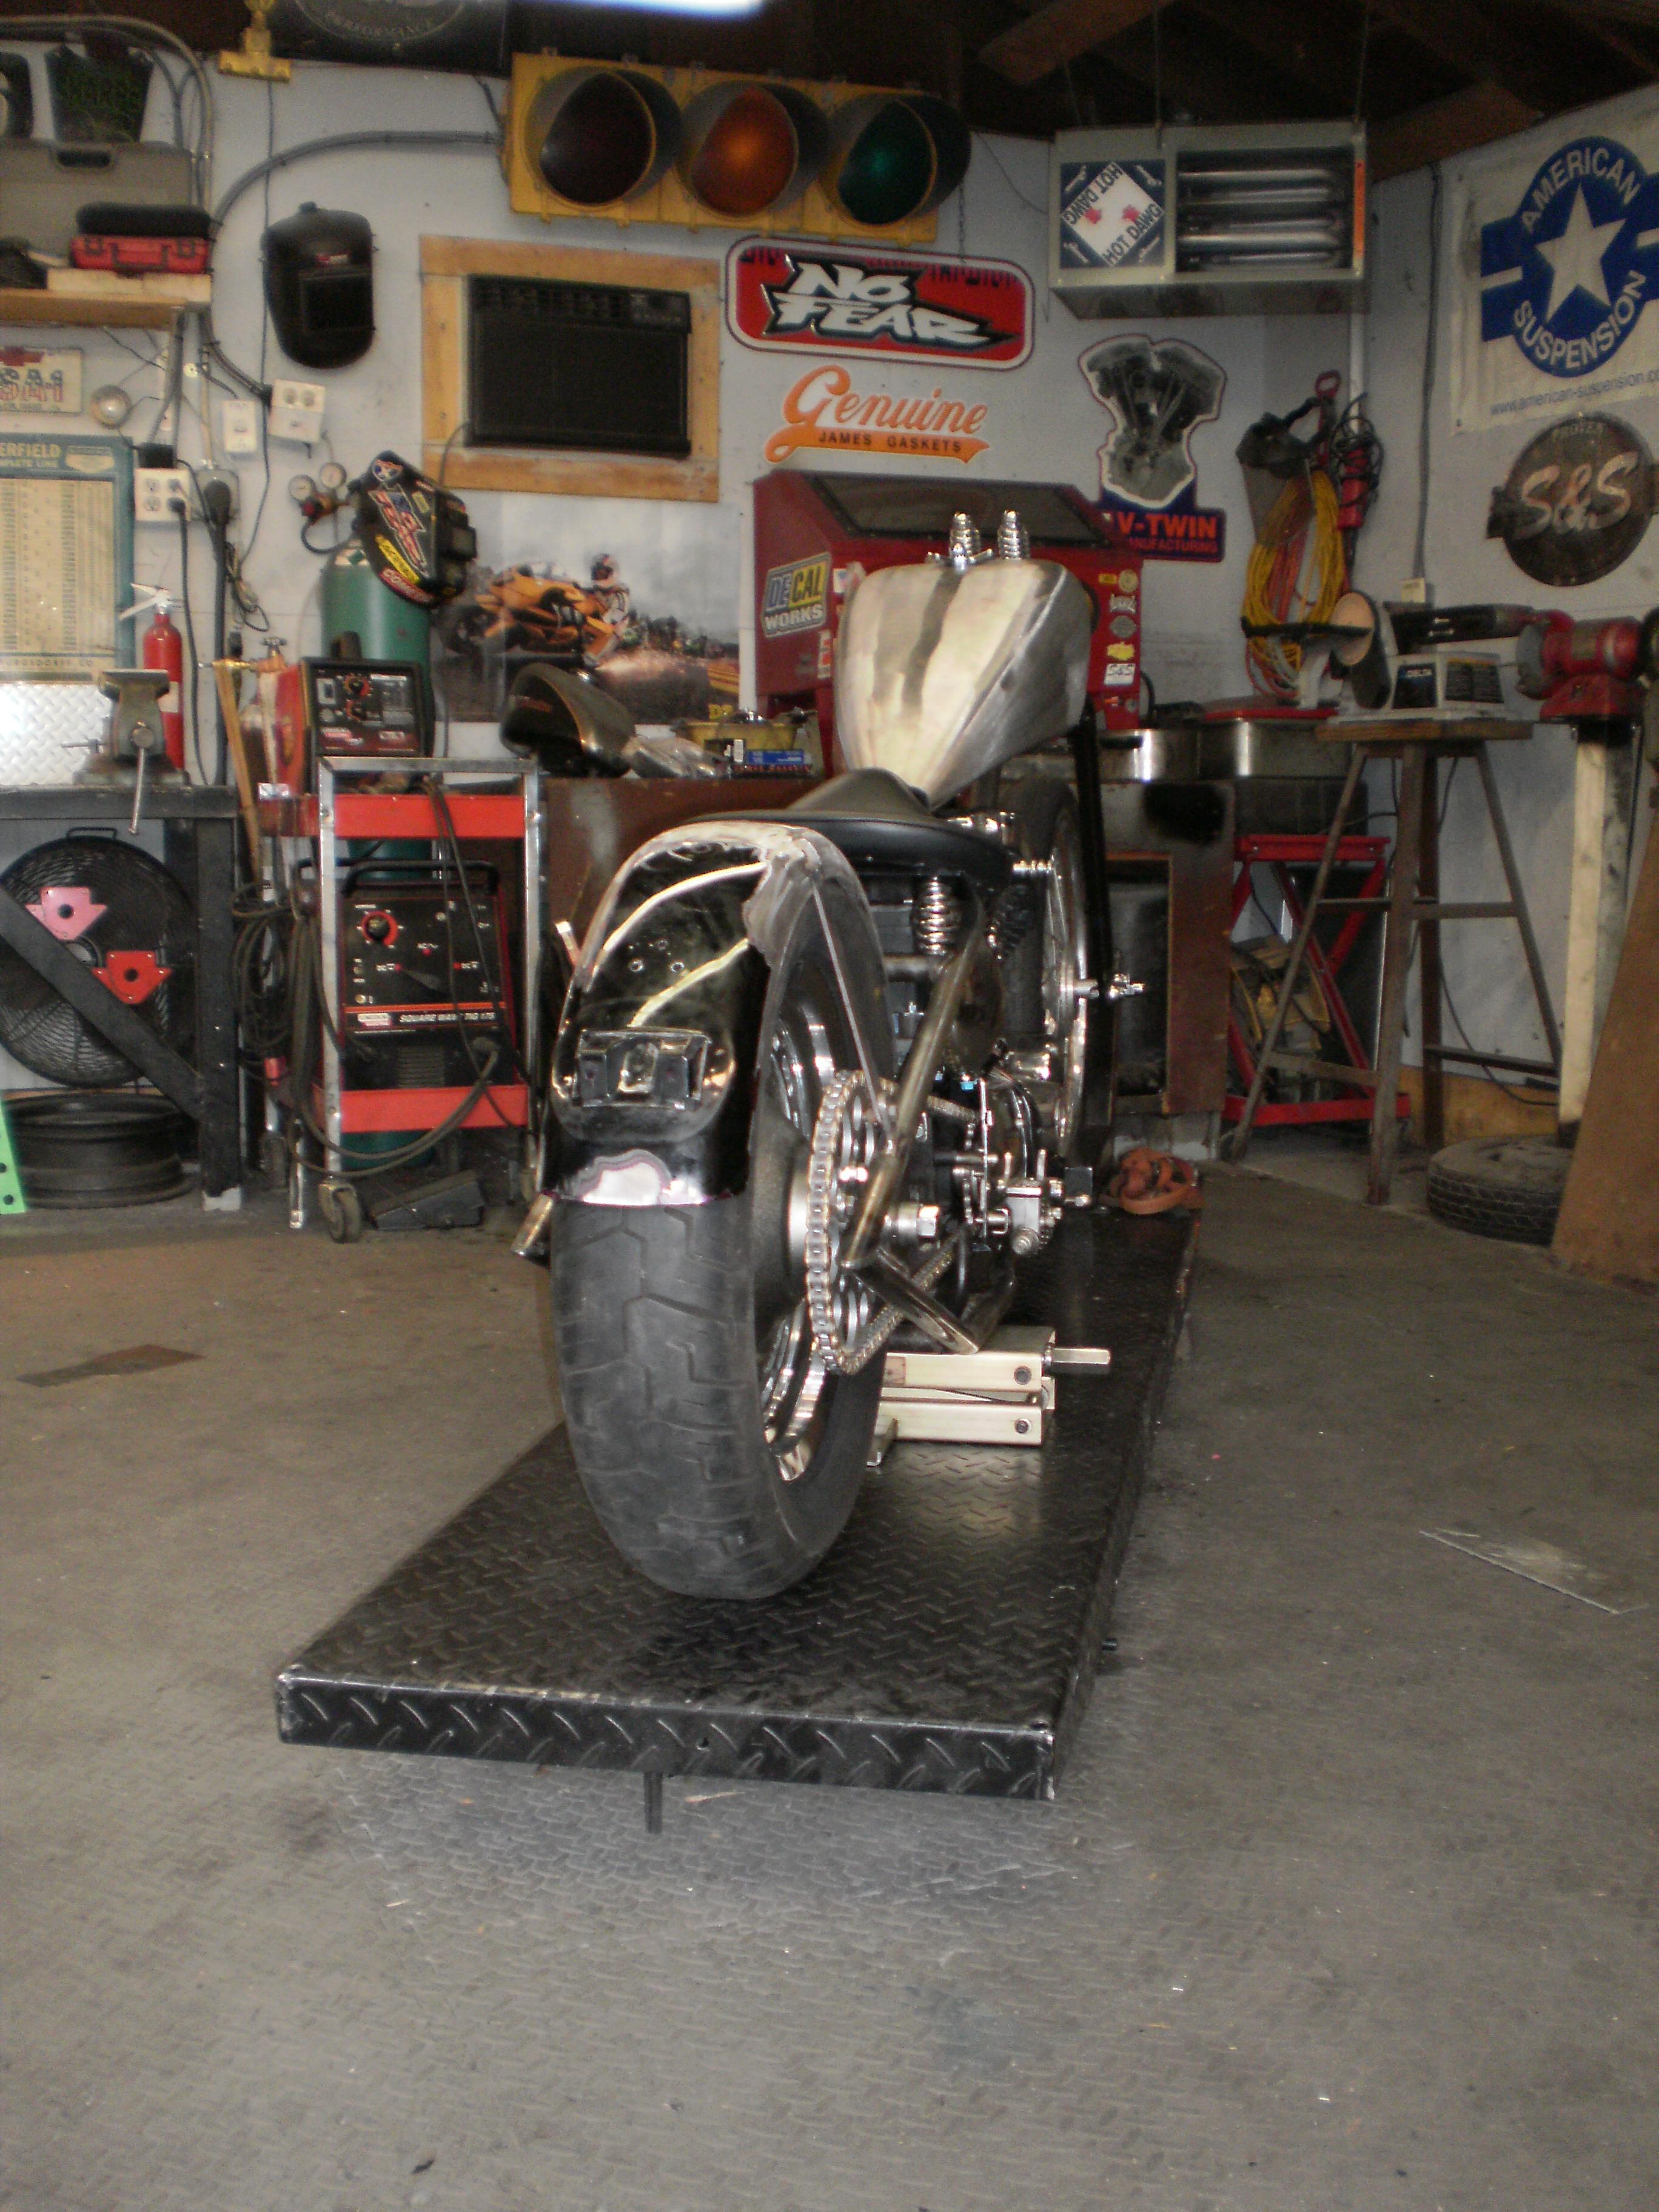 Harley Davidson Sportster Custom Rigid